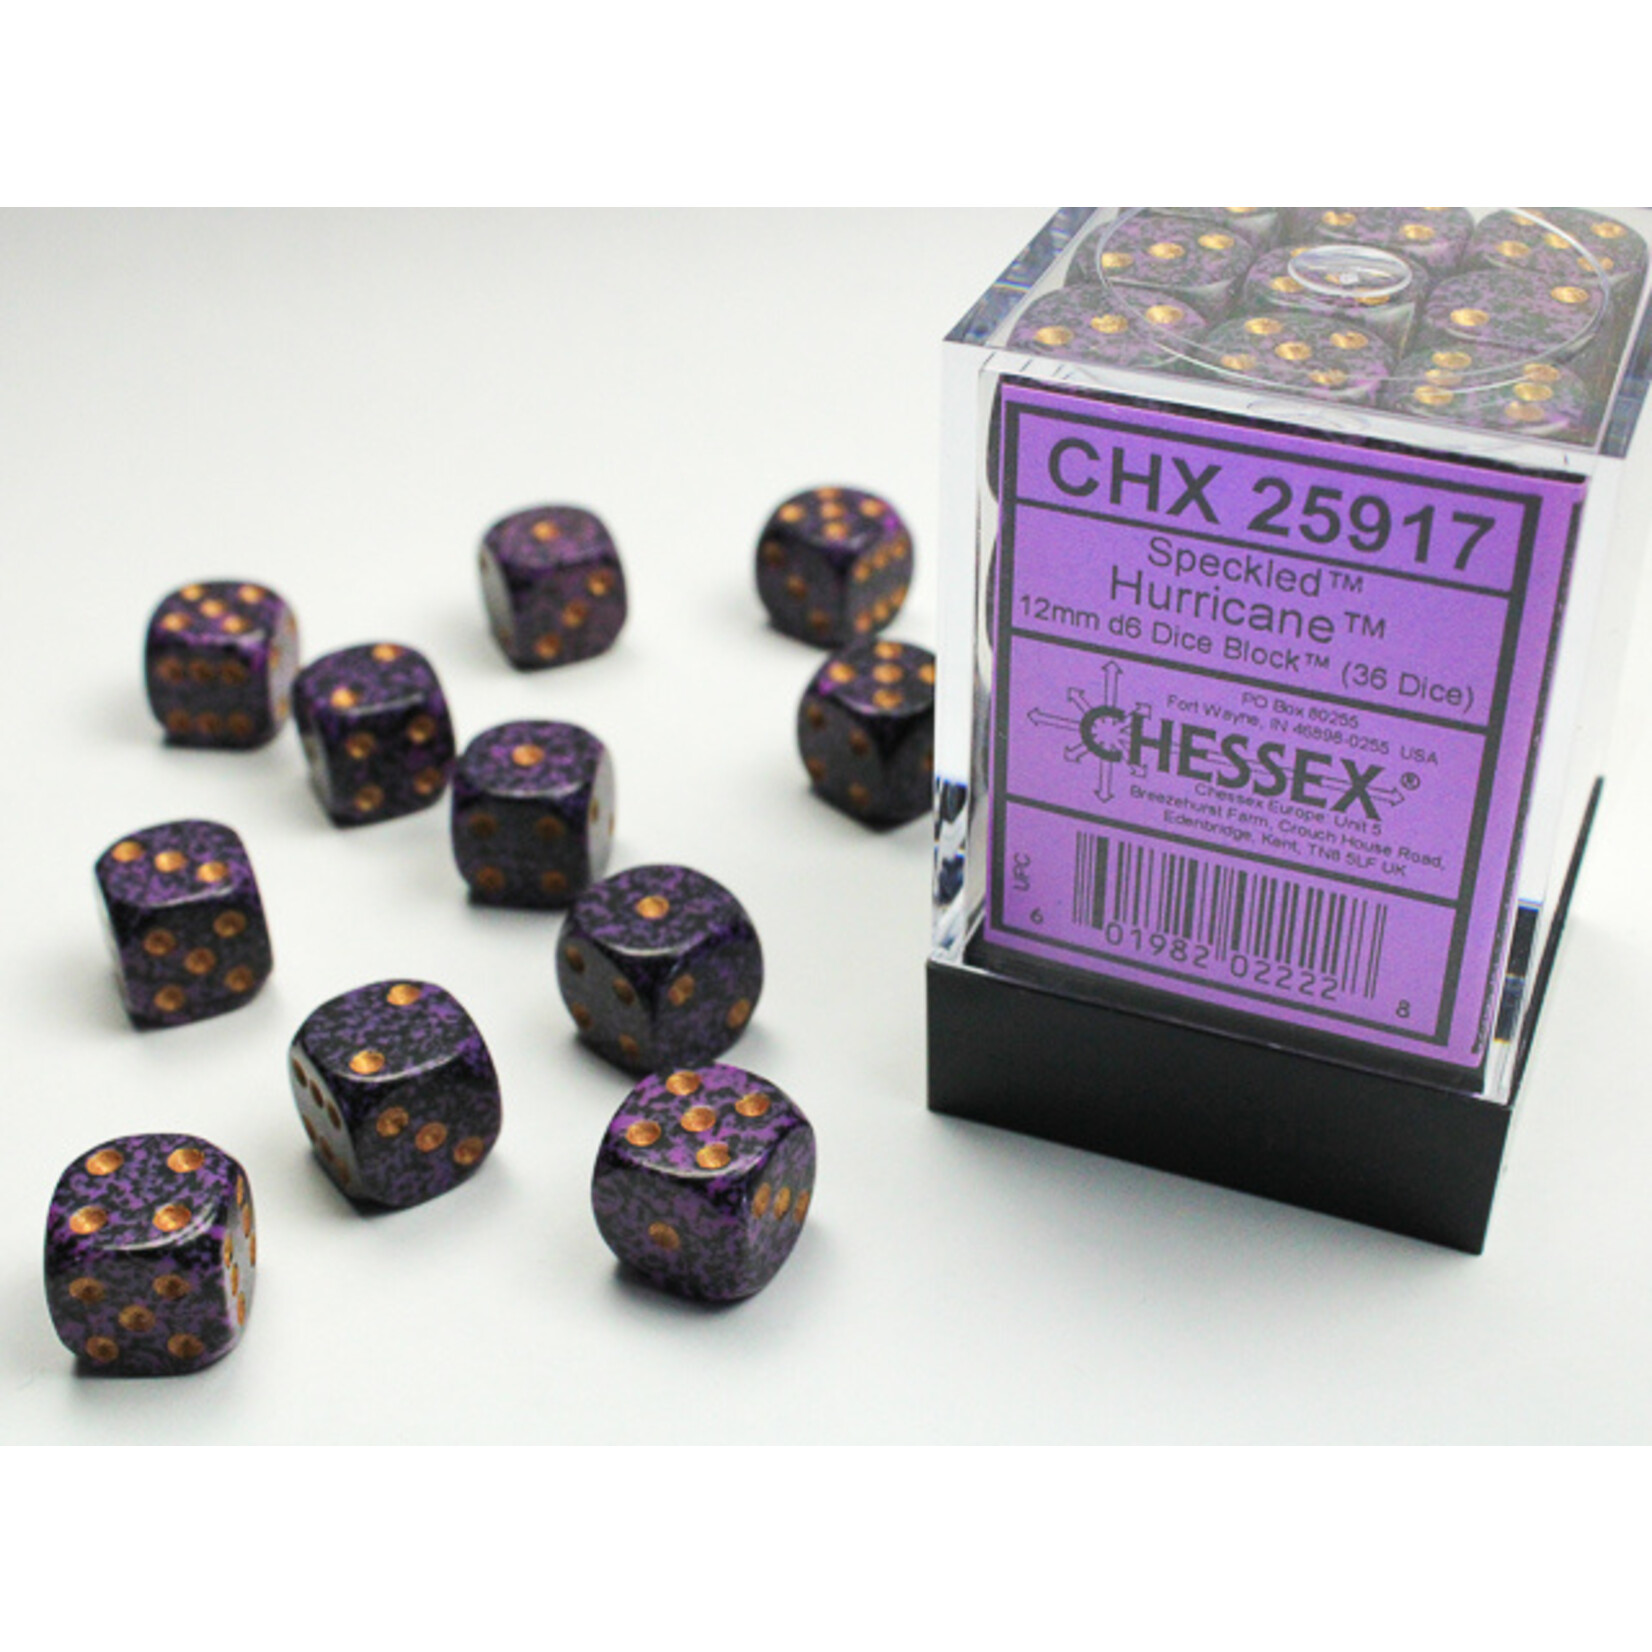 Chessex Speckled Hurricane 12mm d6 Dice Block (36 dice)